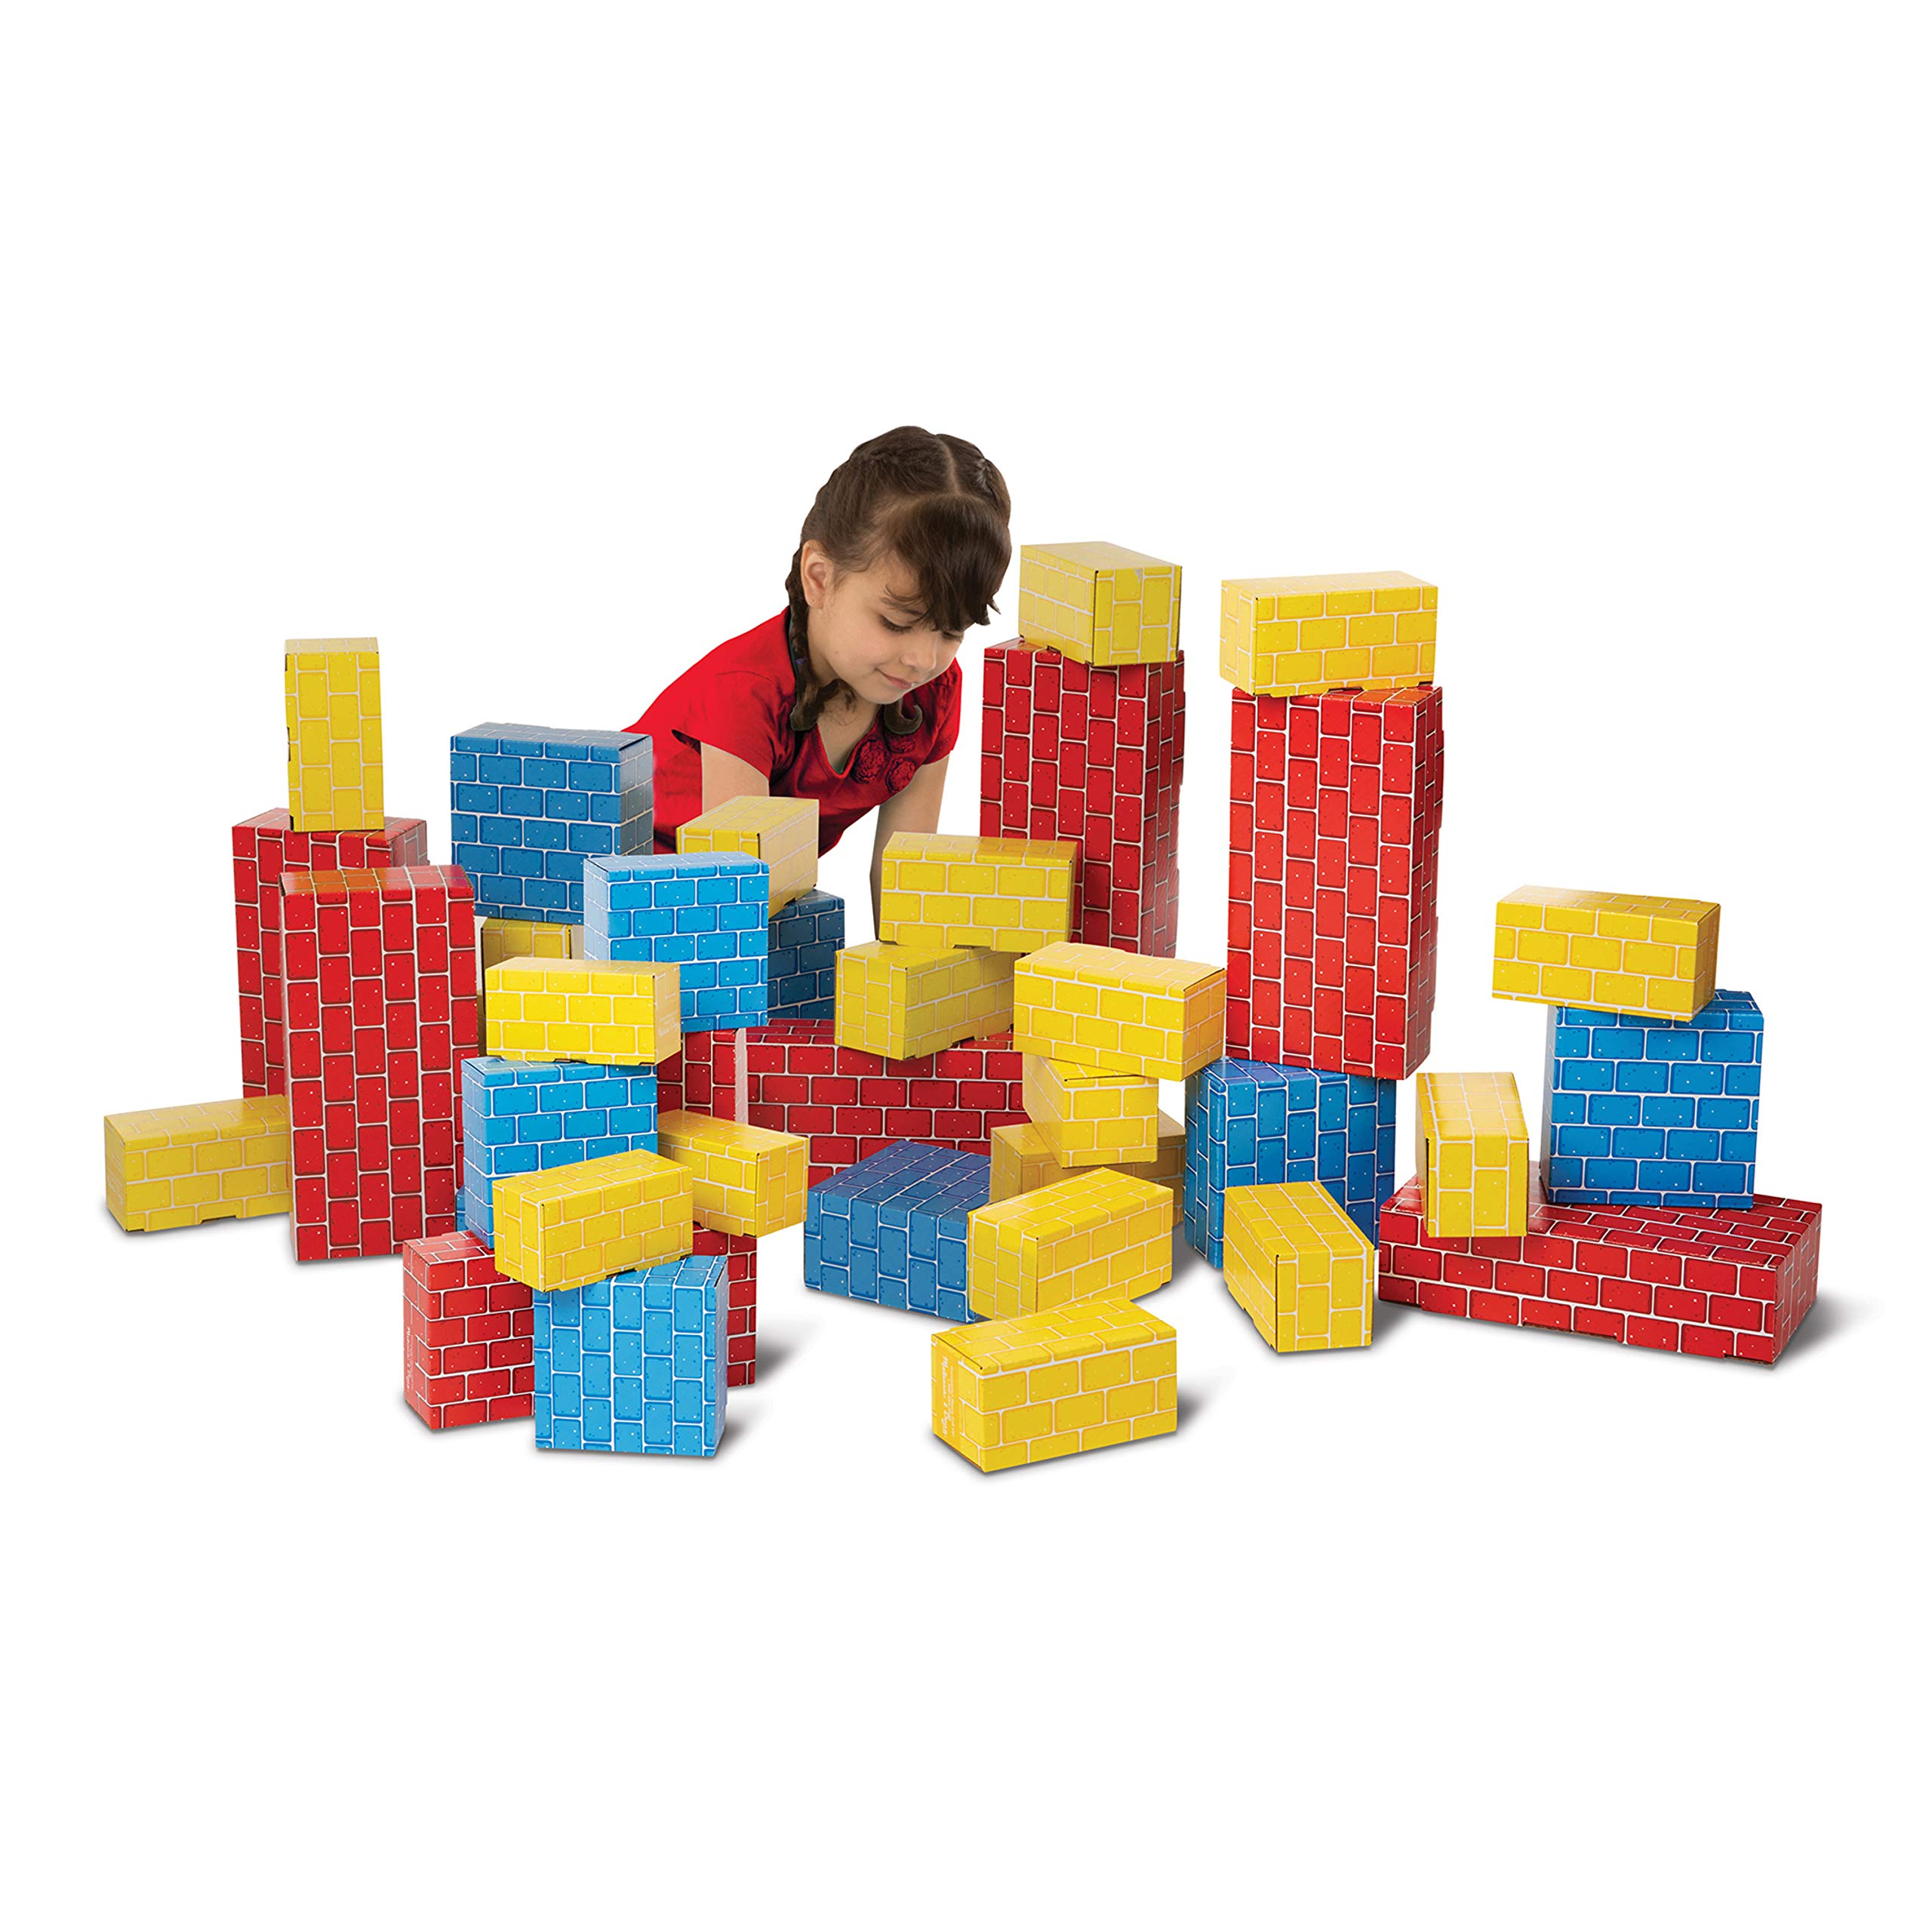 Melissa & Doug Jumbo Extra-Thick Cardboard Building Blocks - 40 Blocks in 3 Sizes